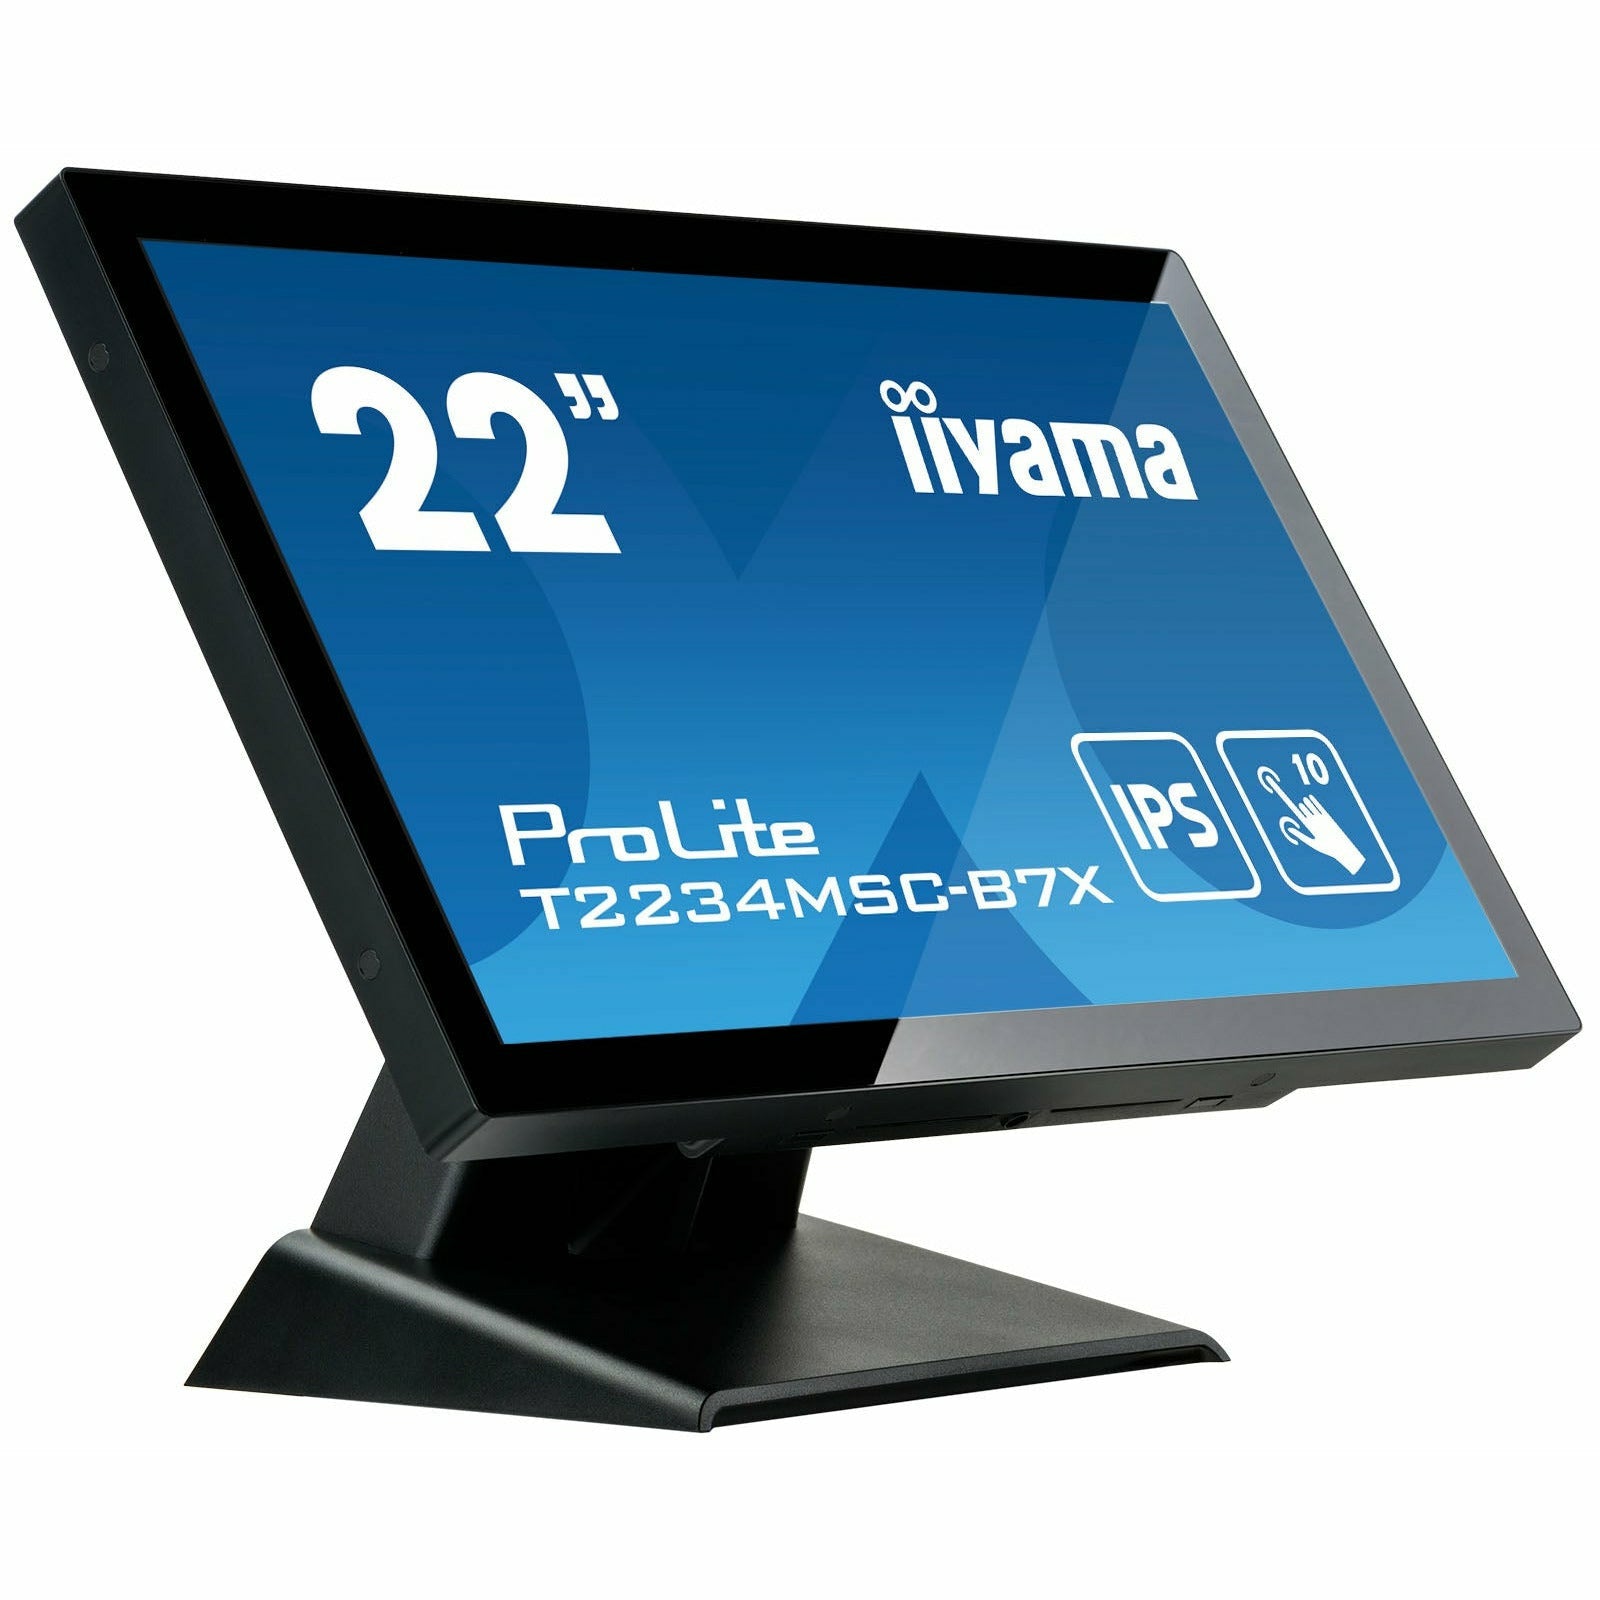 iiyama ProLite T2234MSC-B7X 22" IPS Touch Screen Display